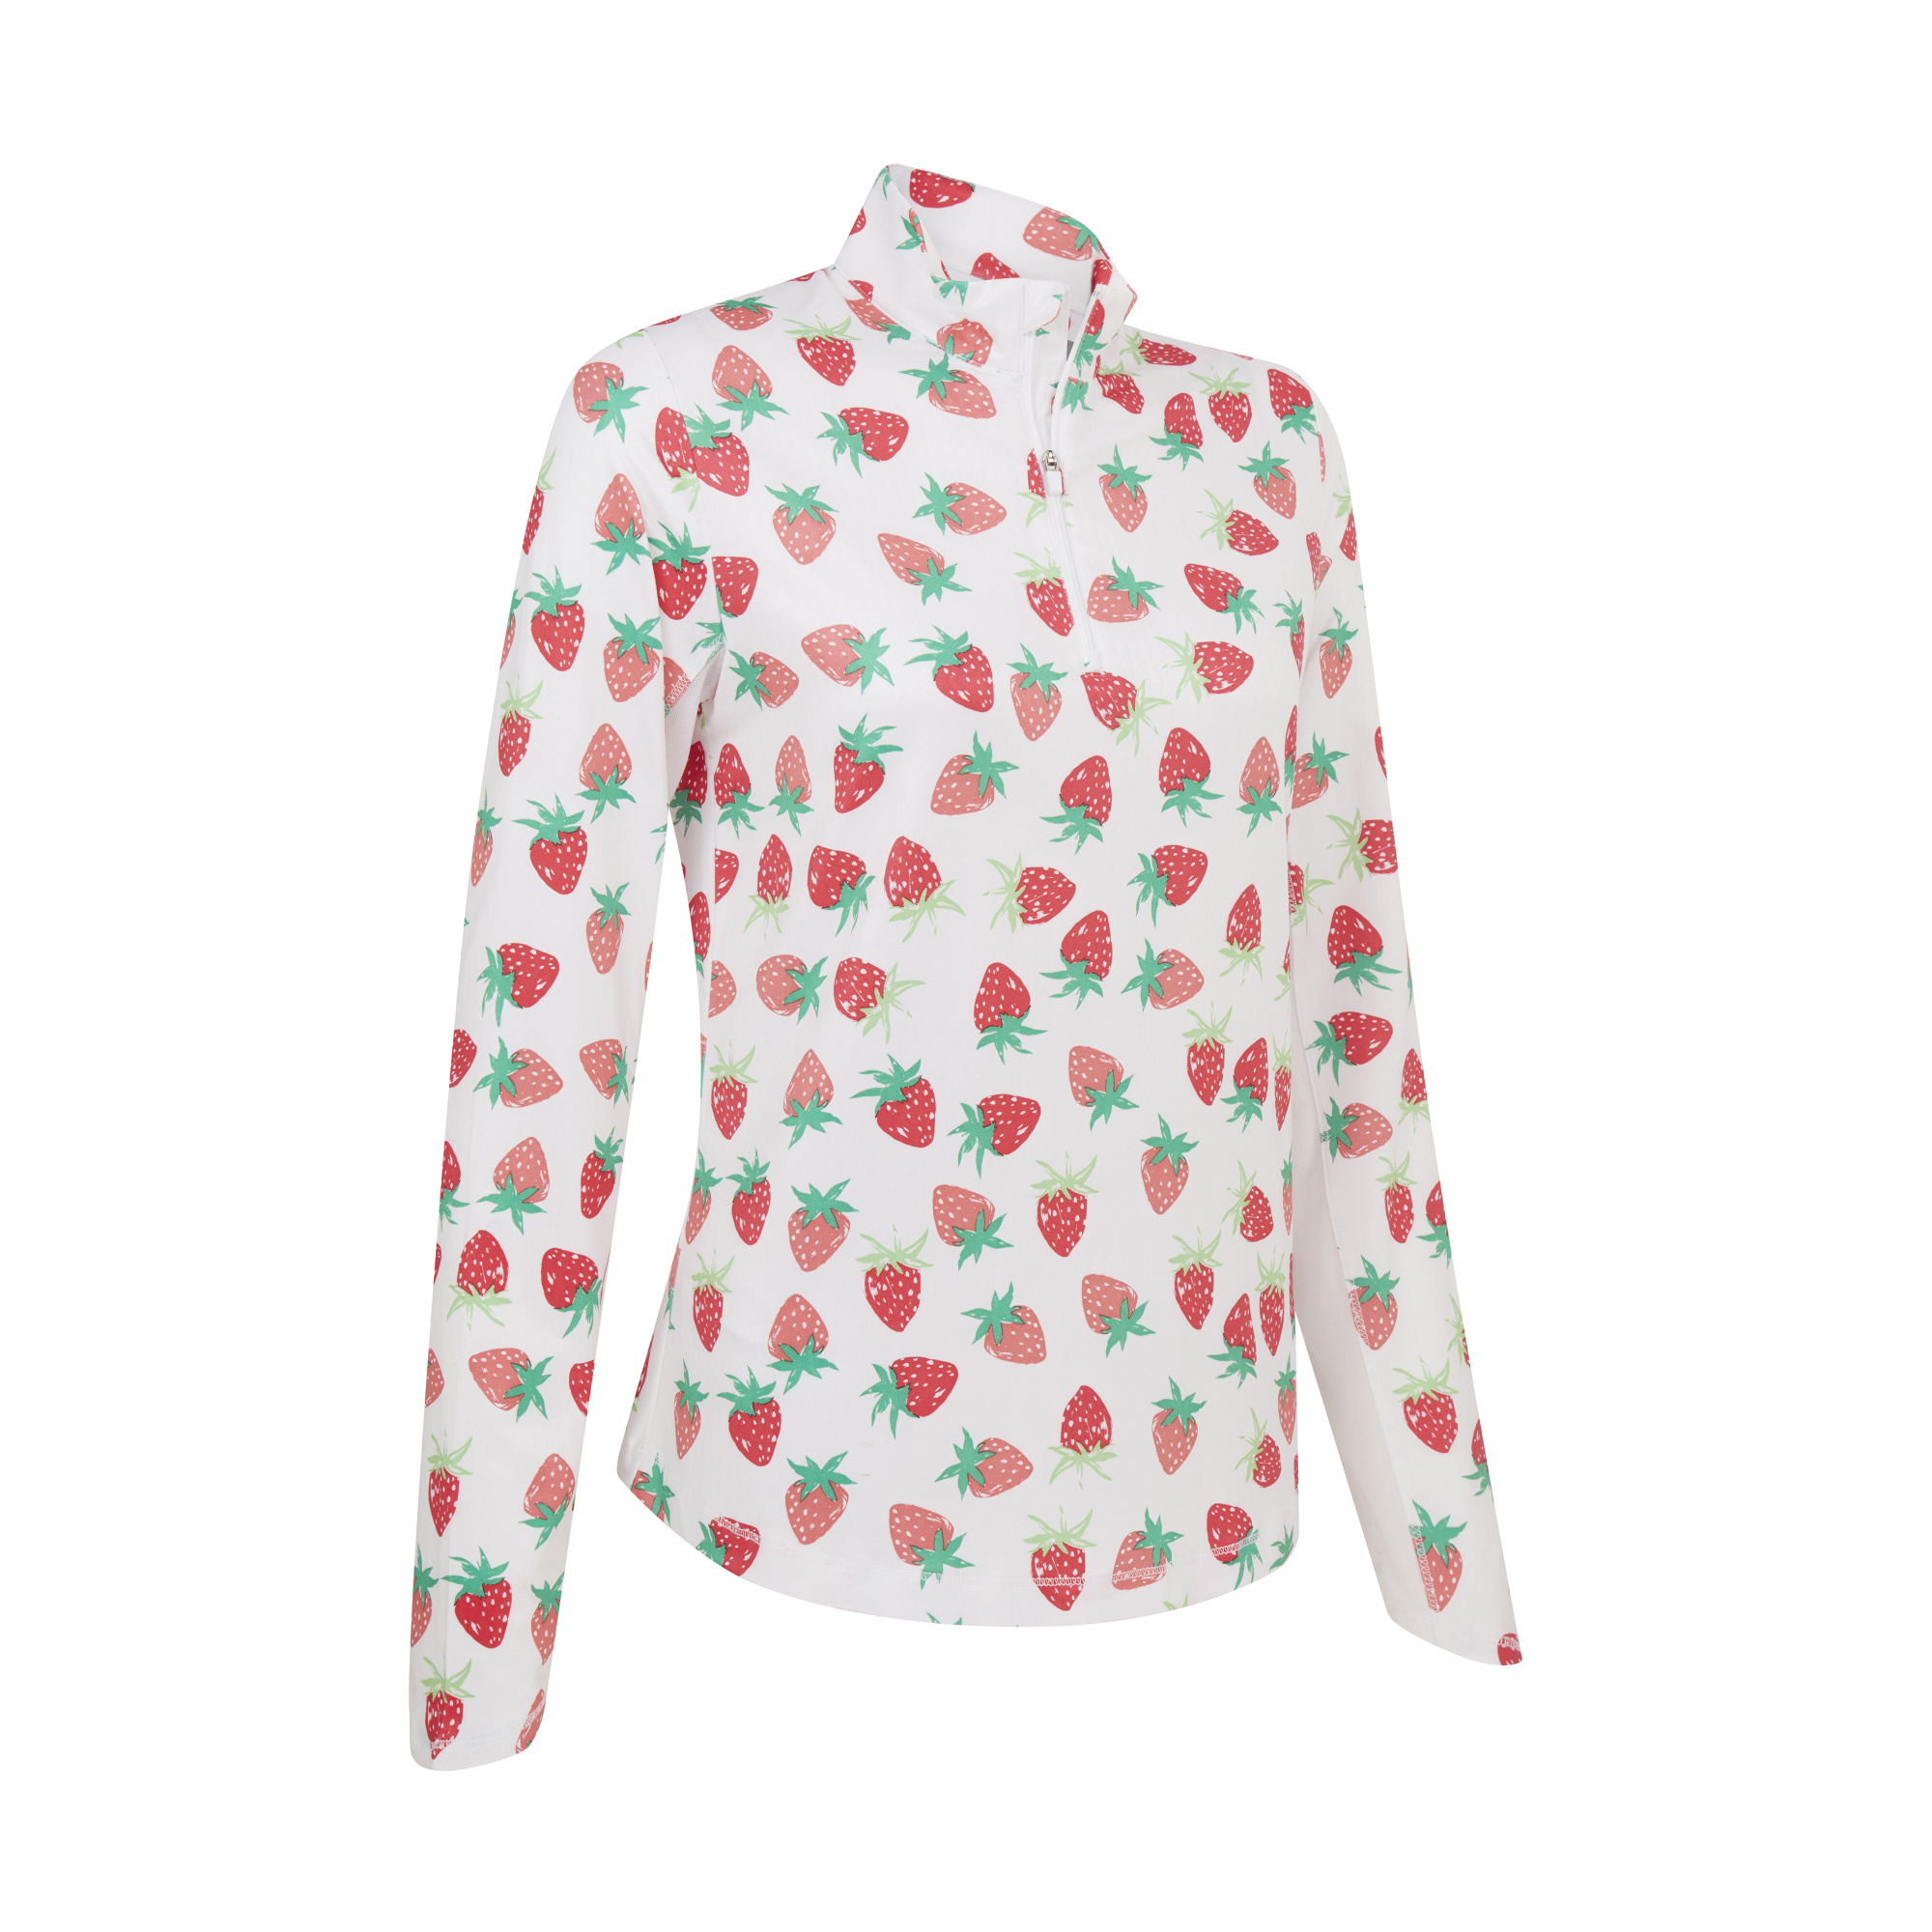 Callaway Strawberries Sun Protection dámské triko s dlouhým rukávem, bílé, vel. M